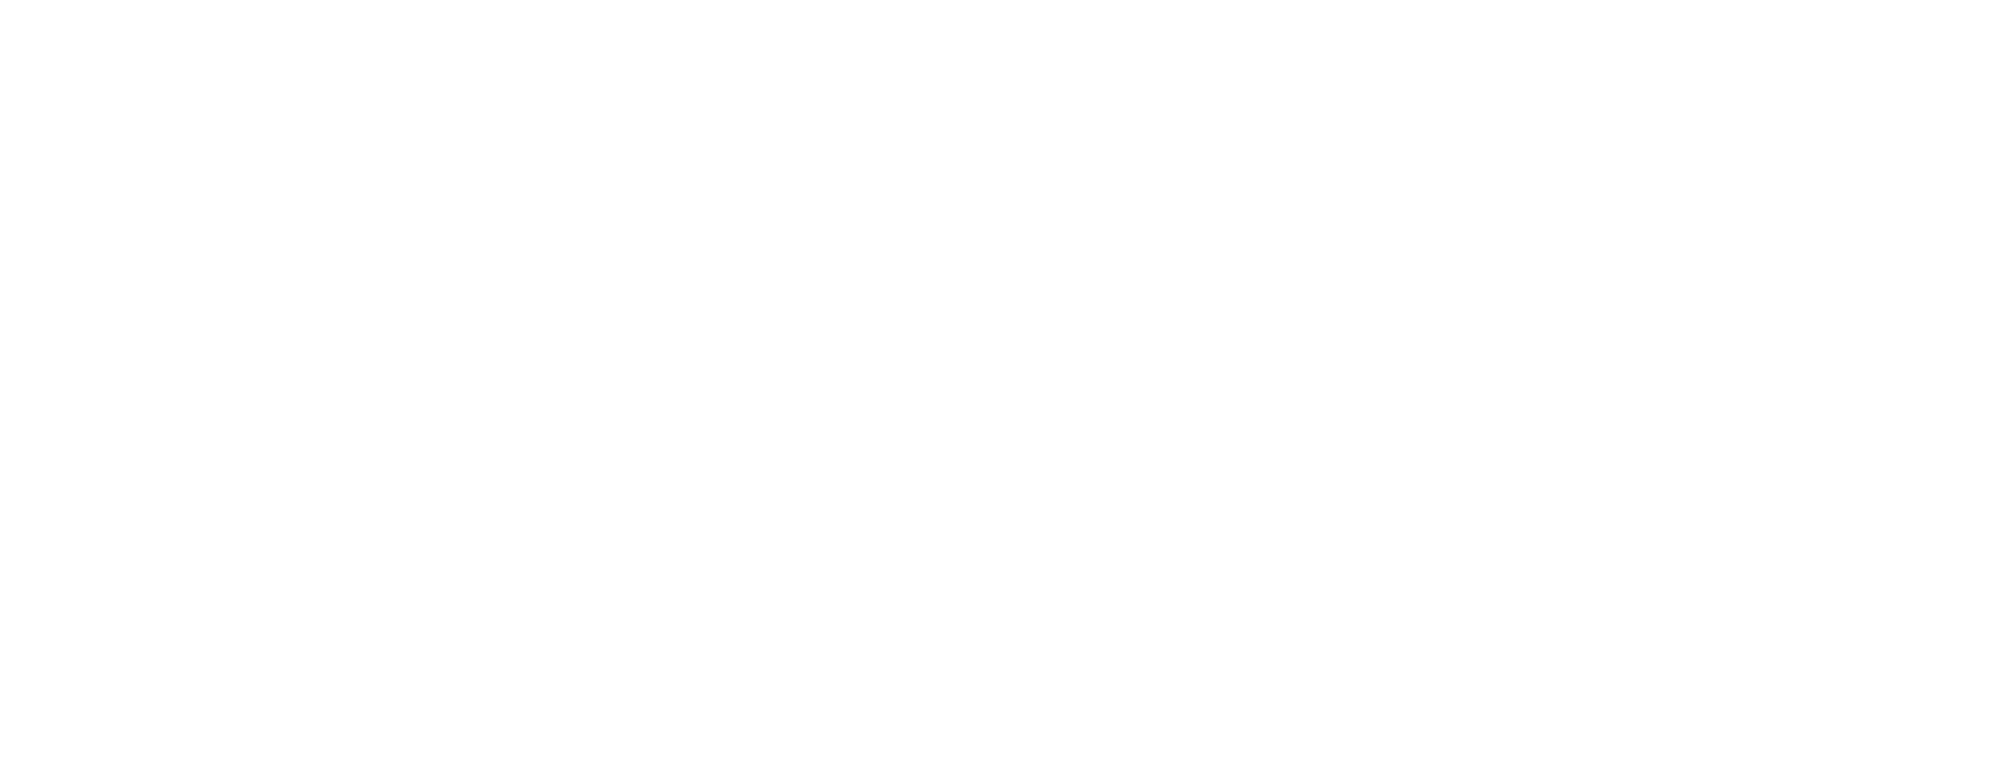 Fraserglen Golf Course